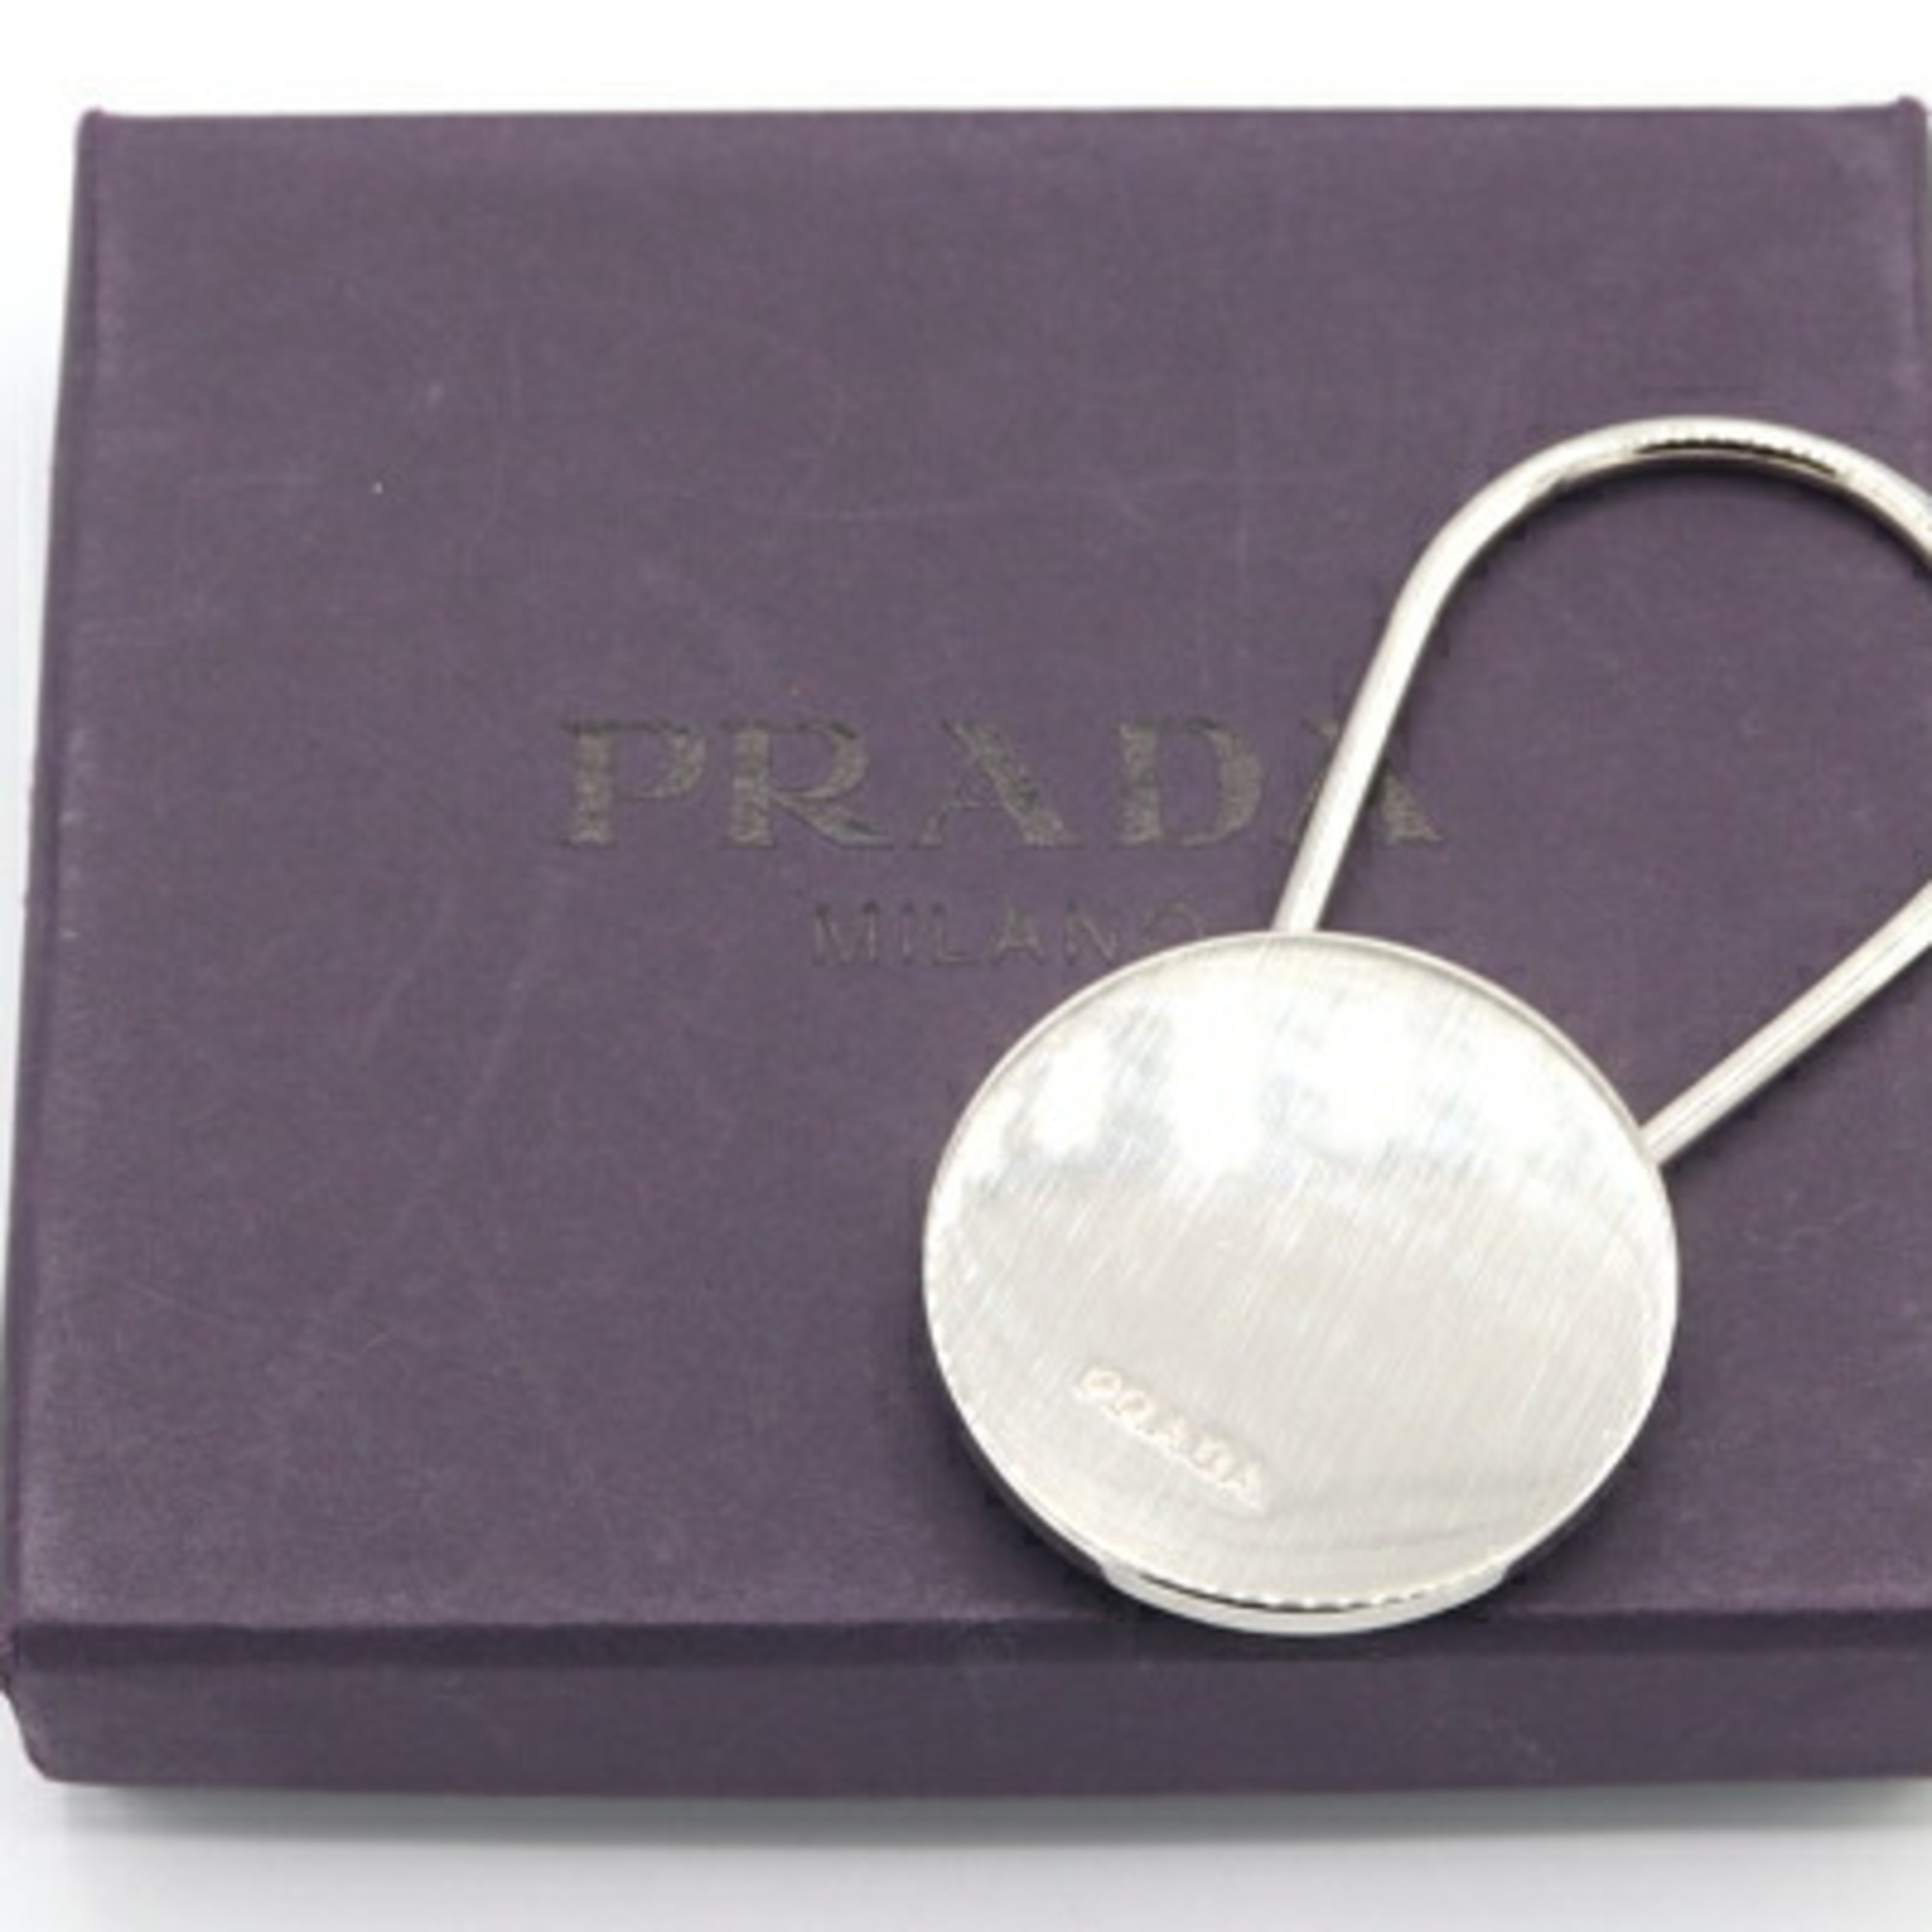 PRADA Keychain M717 Silver Metal Women's Men's Round Key Ring Bag Charm